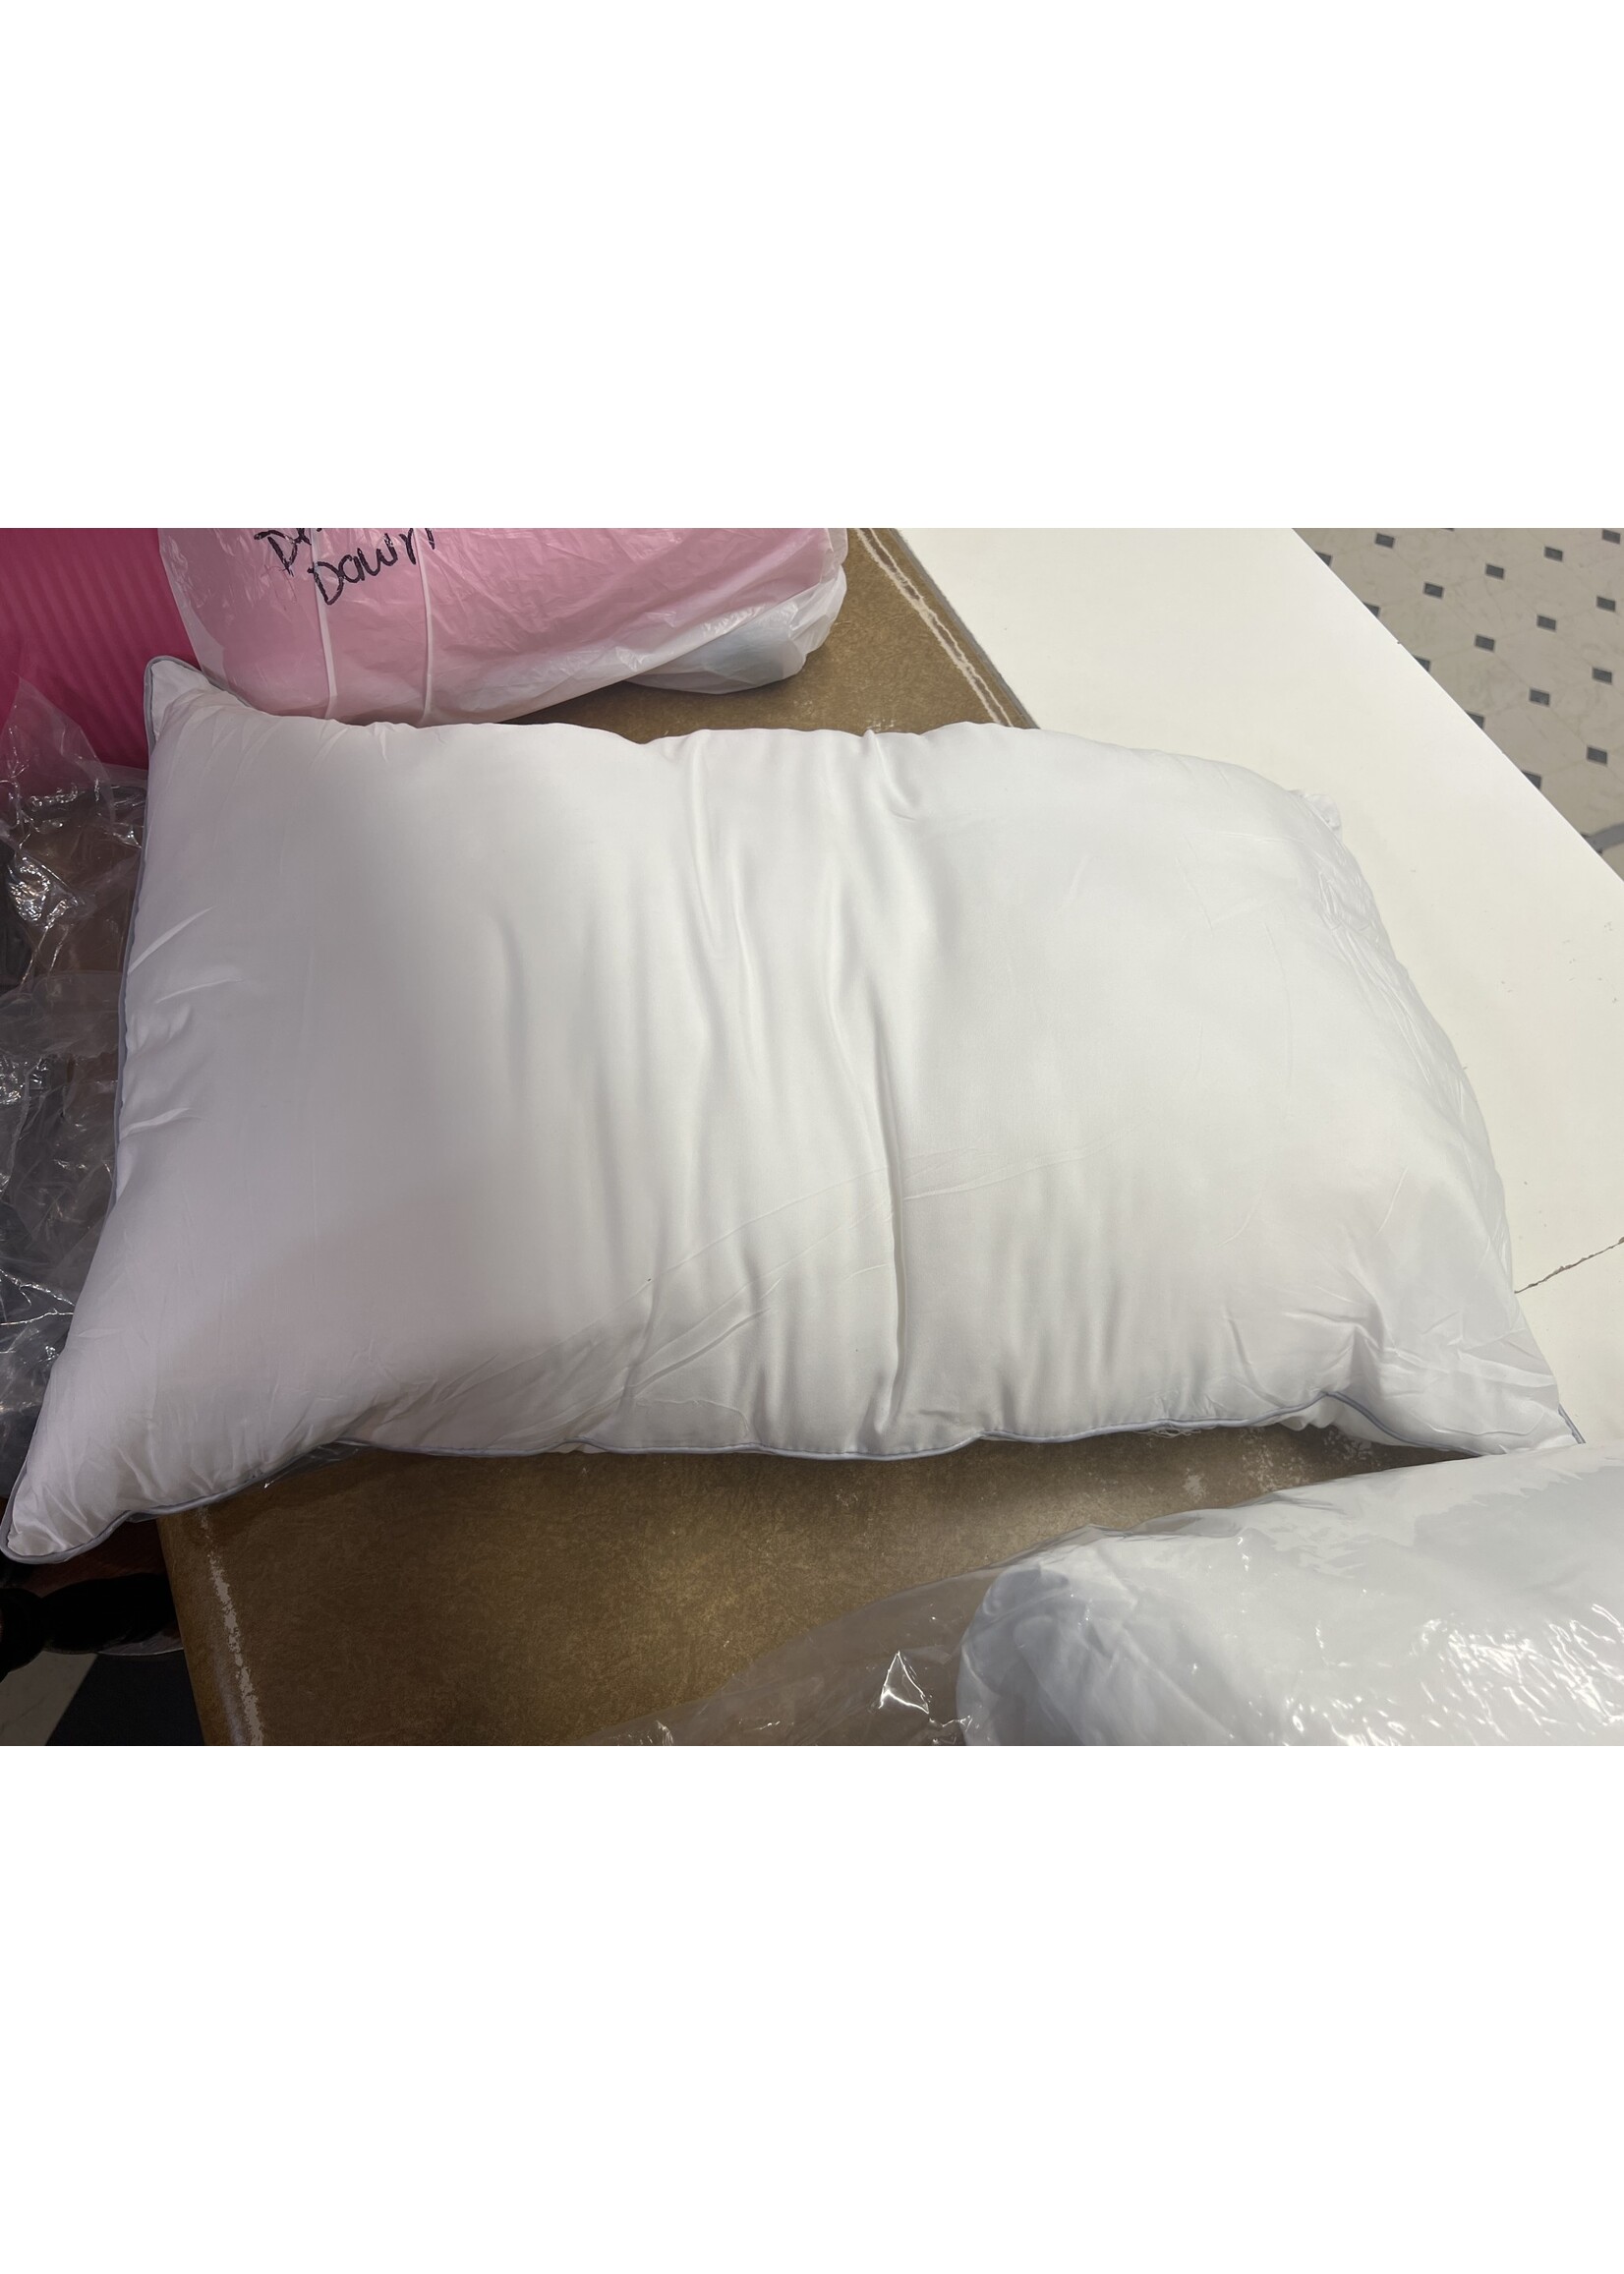 Edow pillow 20”x30”